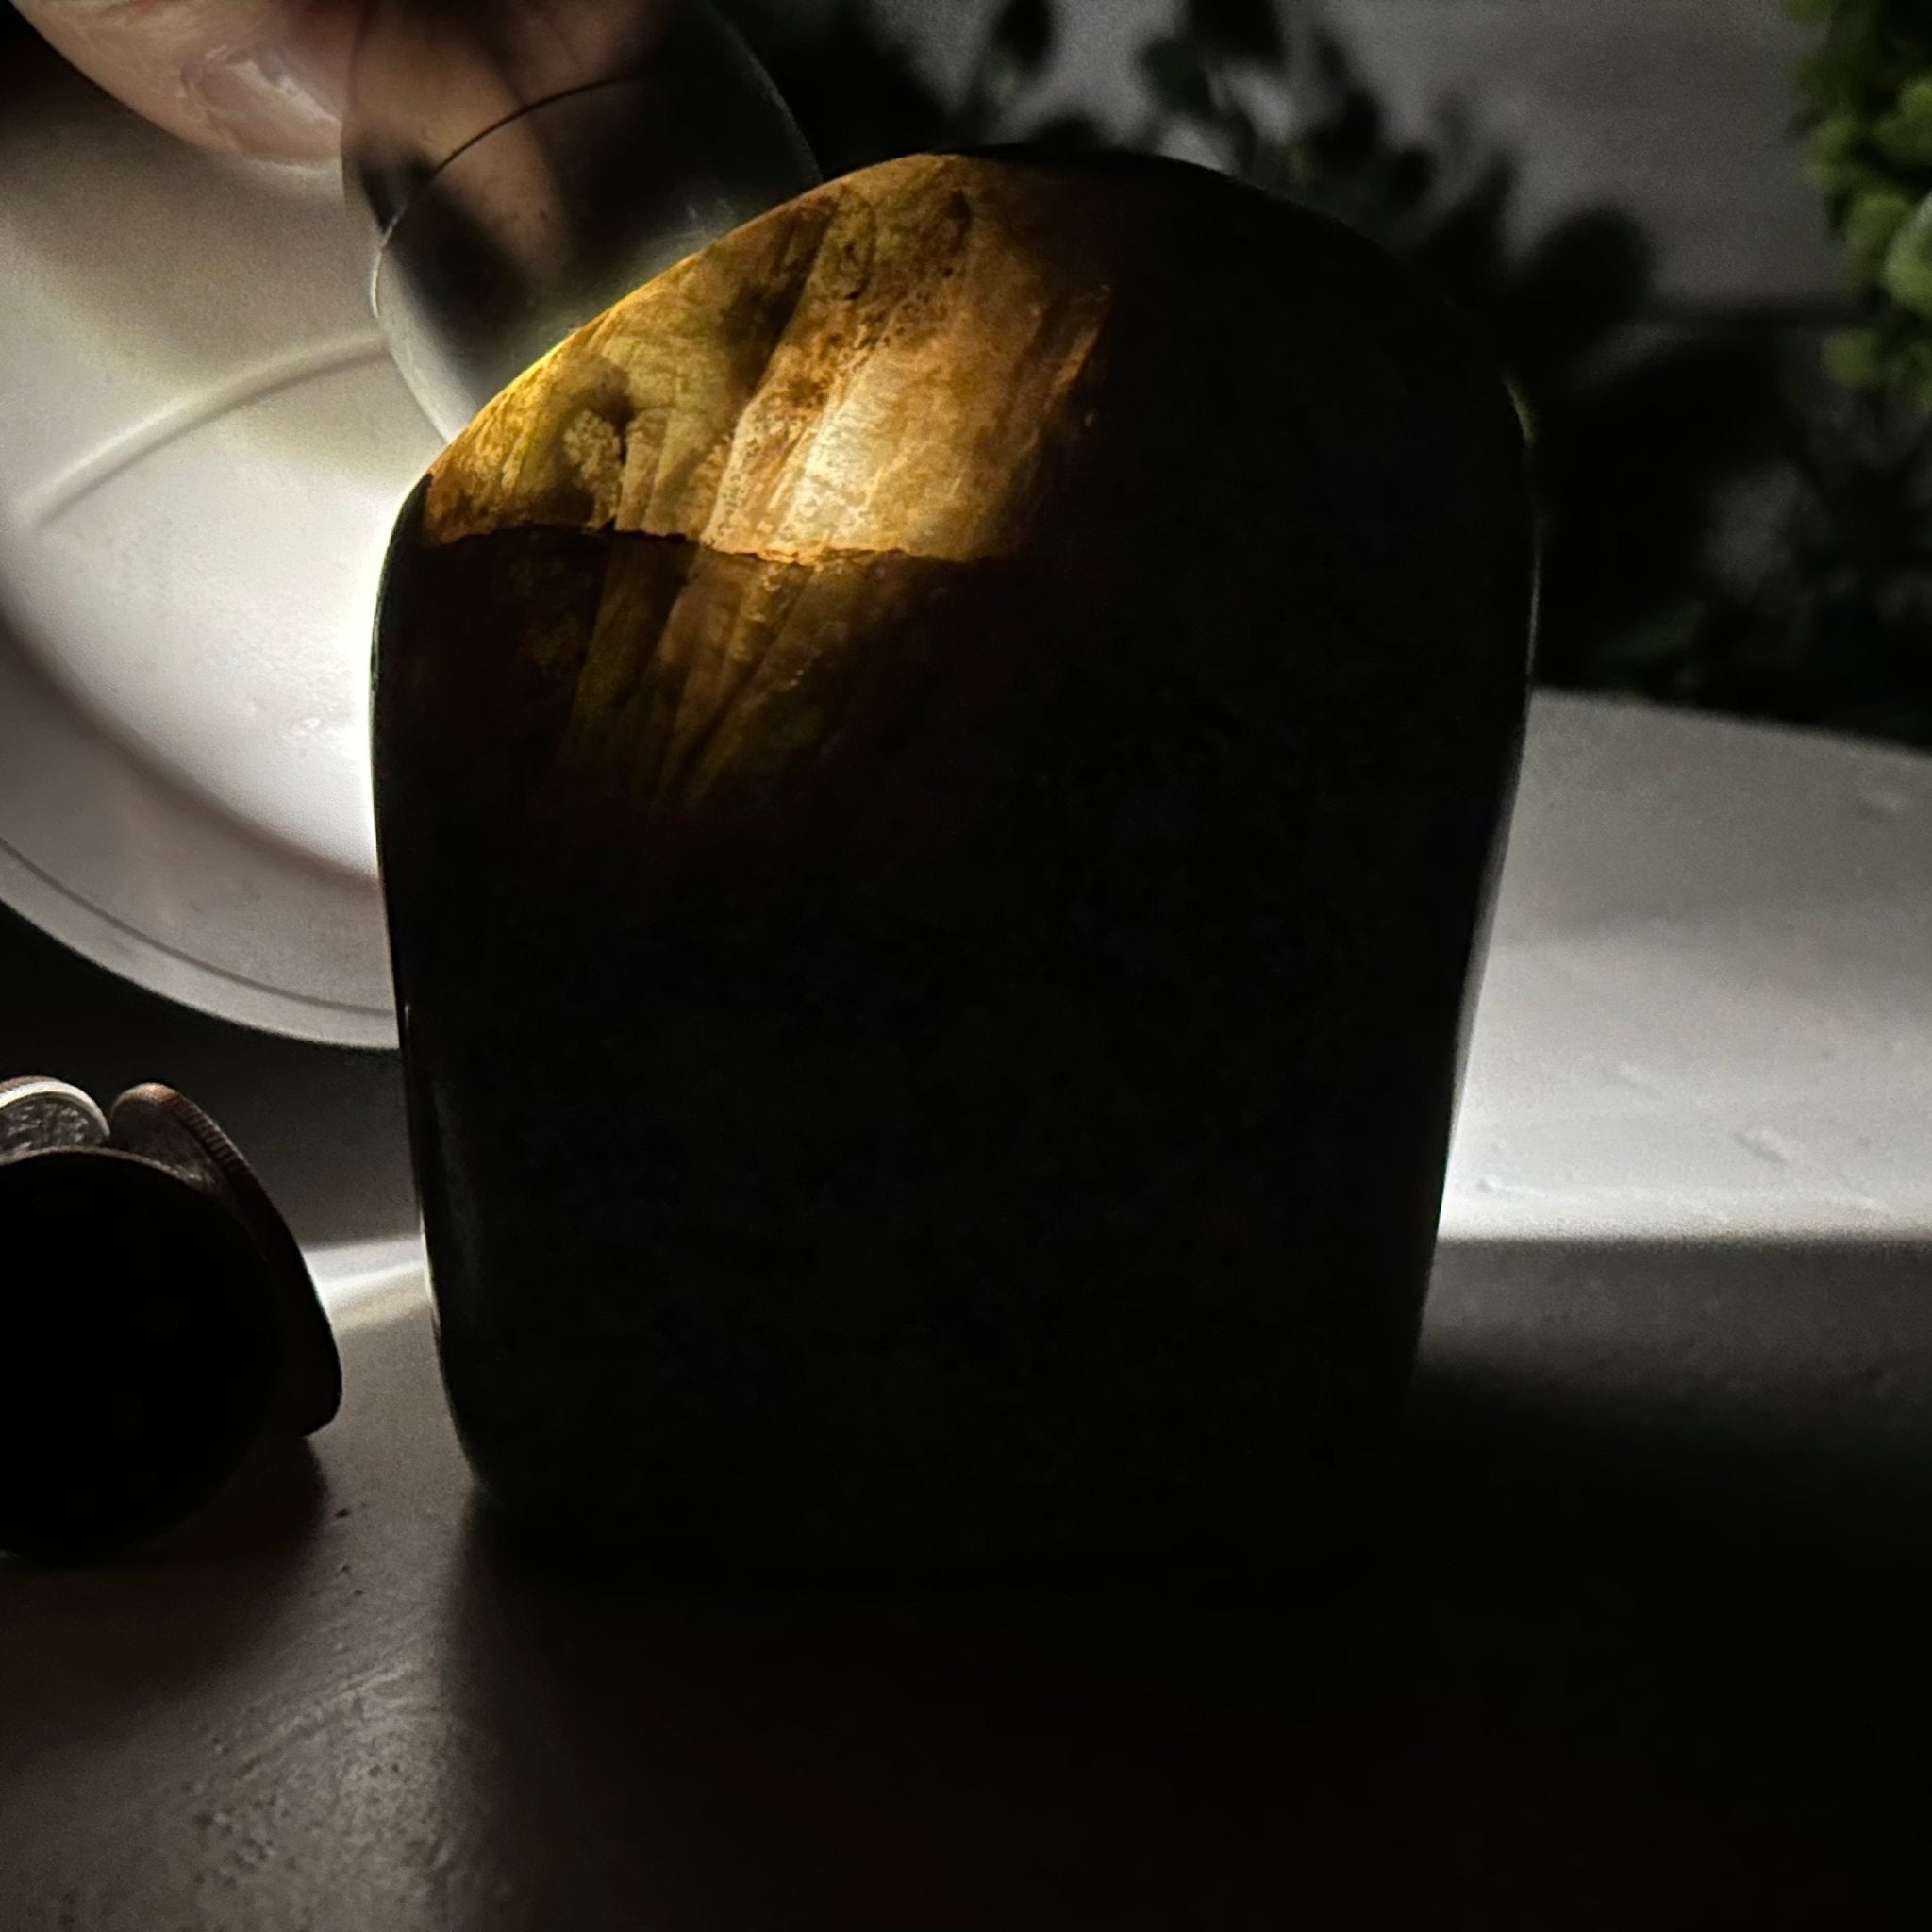 Polished Freeform Labradorite Gemstone, 3.25” tall Model #3301LB-001 by Brazil Gems - Brazil GemsBrazil GemsPolished Freeform Labradorite Gemstone, 3.25” tall Model #3301LB-001 by Brazil GemsFreeform & Unique Shapes3301LB-001